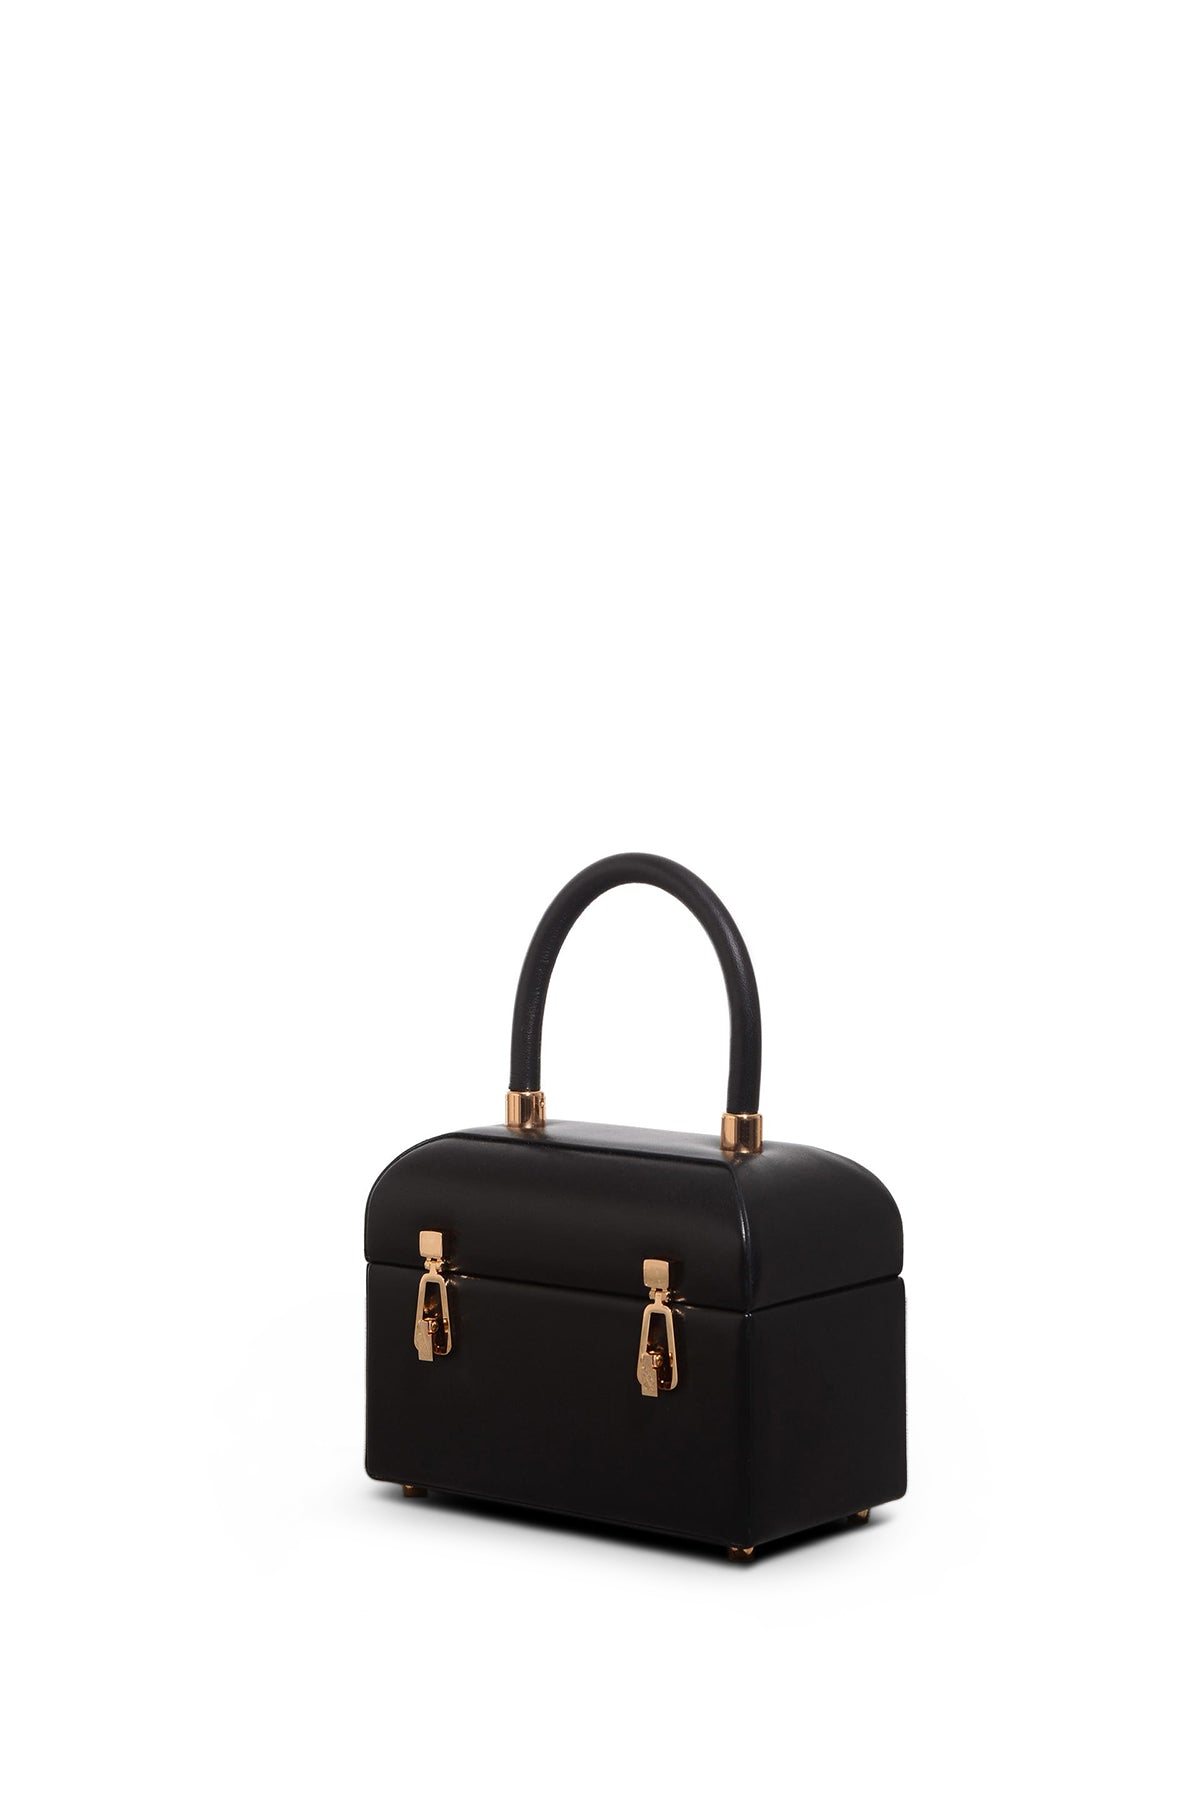 Patsy Bag in Black Nappa Leather